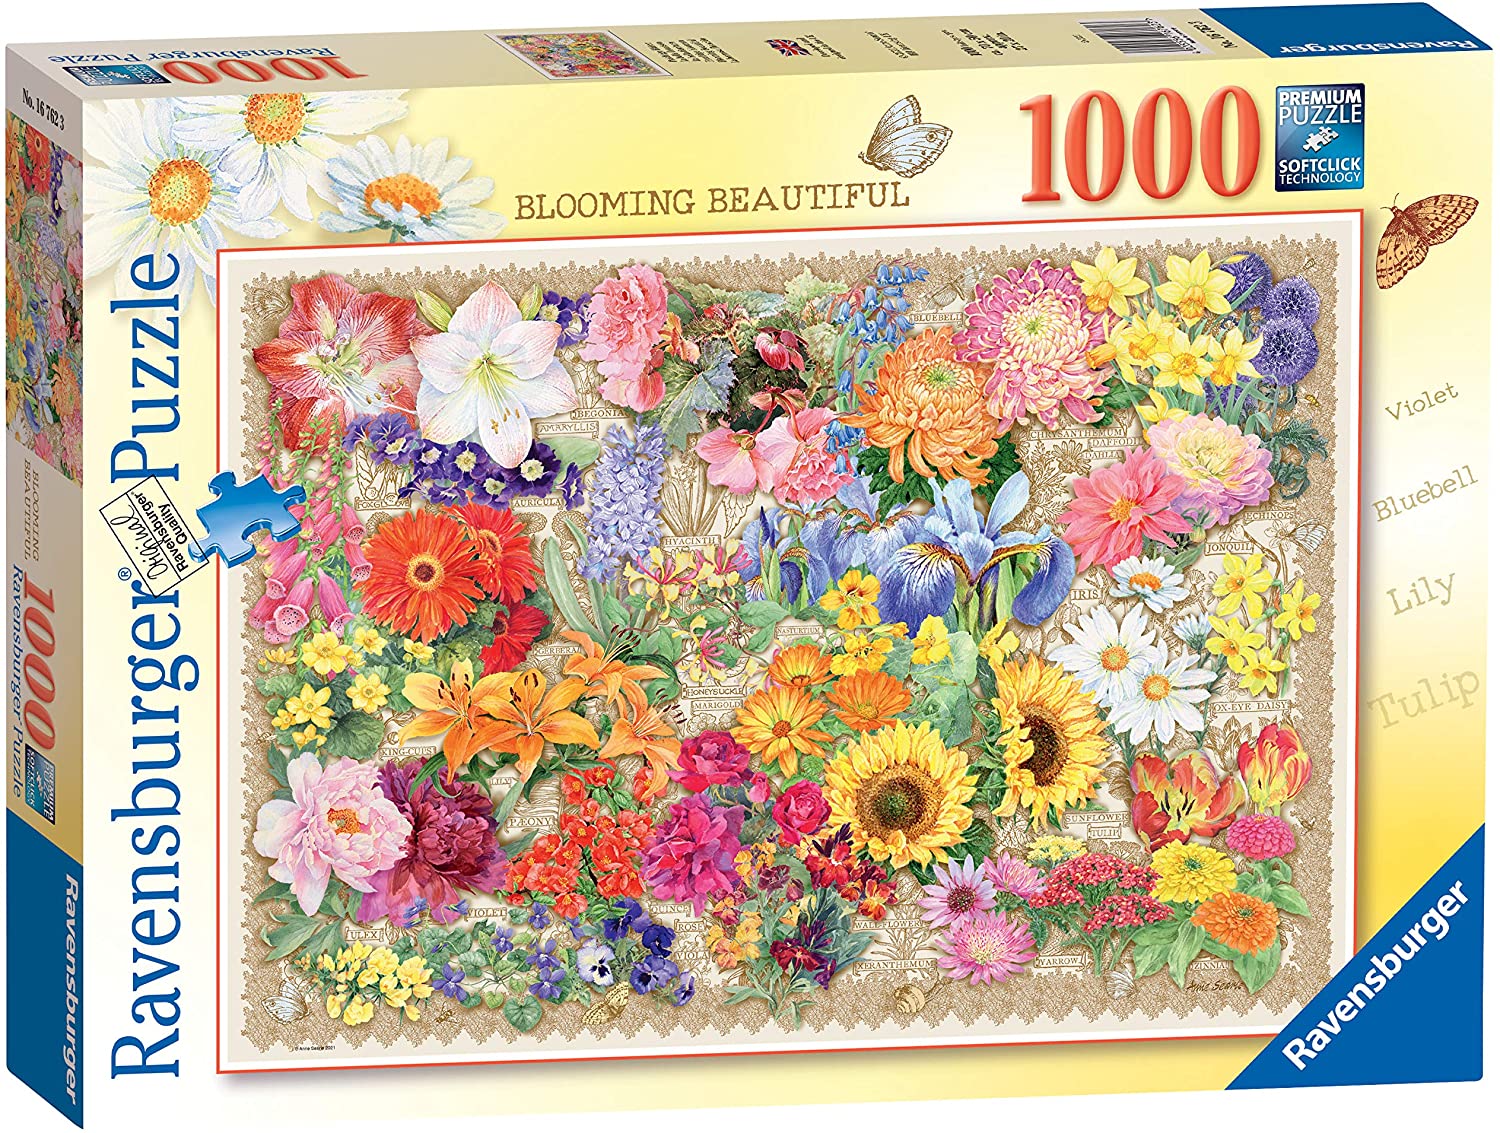 Ravensburger Blooming Beautiful 1000 Piece Jigsaw